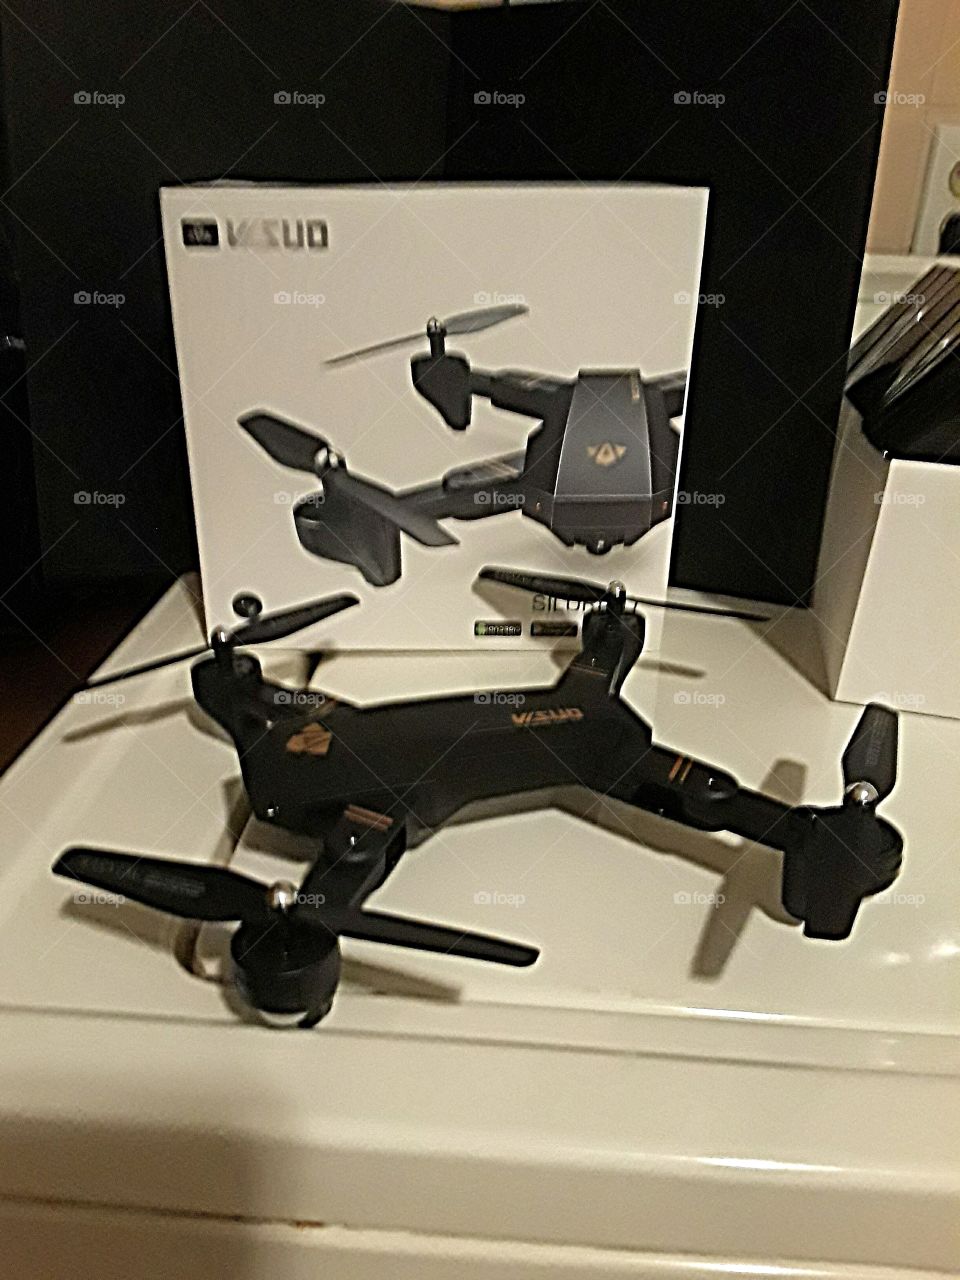 My Mavic DJi Drone with camera and video capabilities...